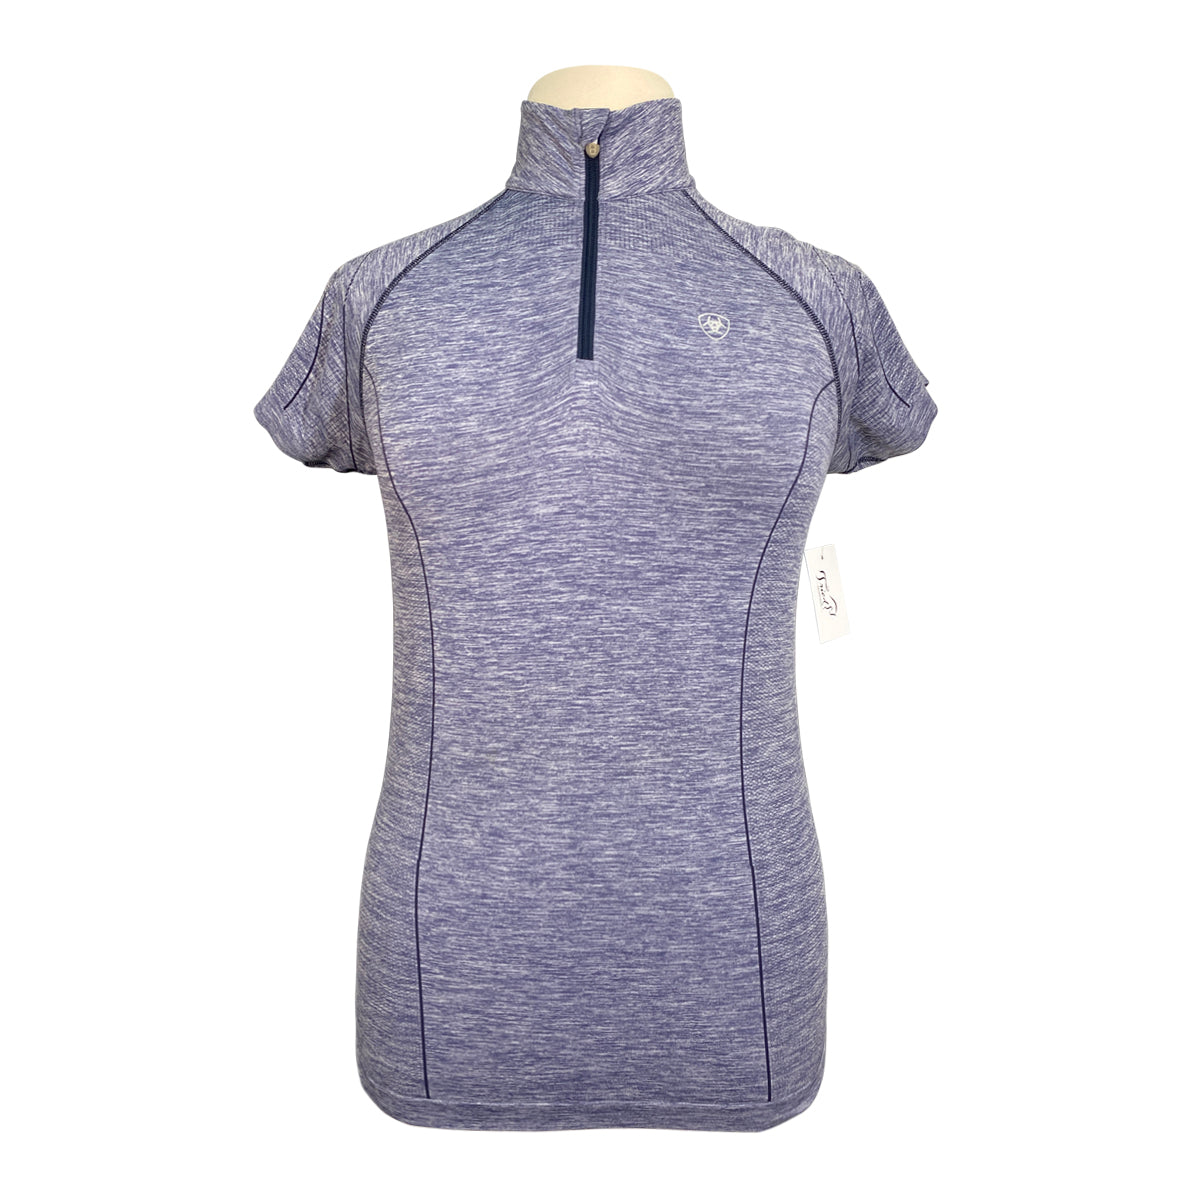 Ariat Tek Heat Series Short Sleeve Shirt Shirt in Heathered Purple